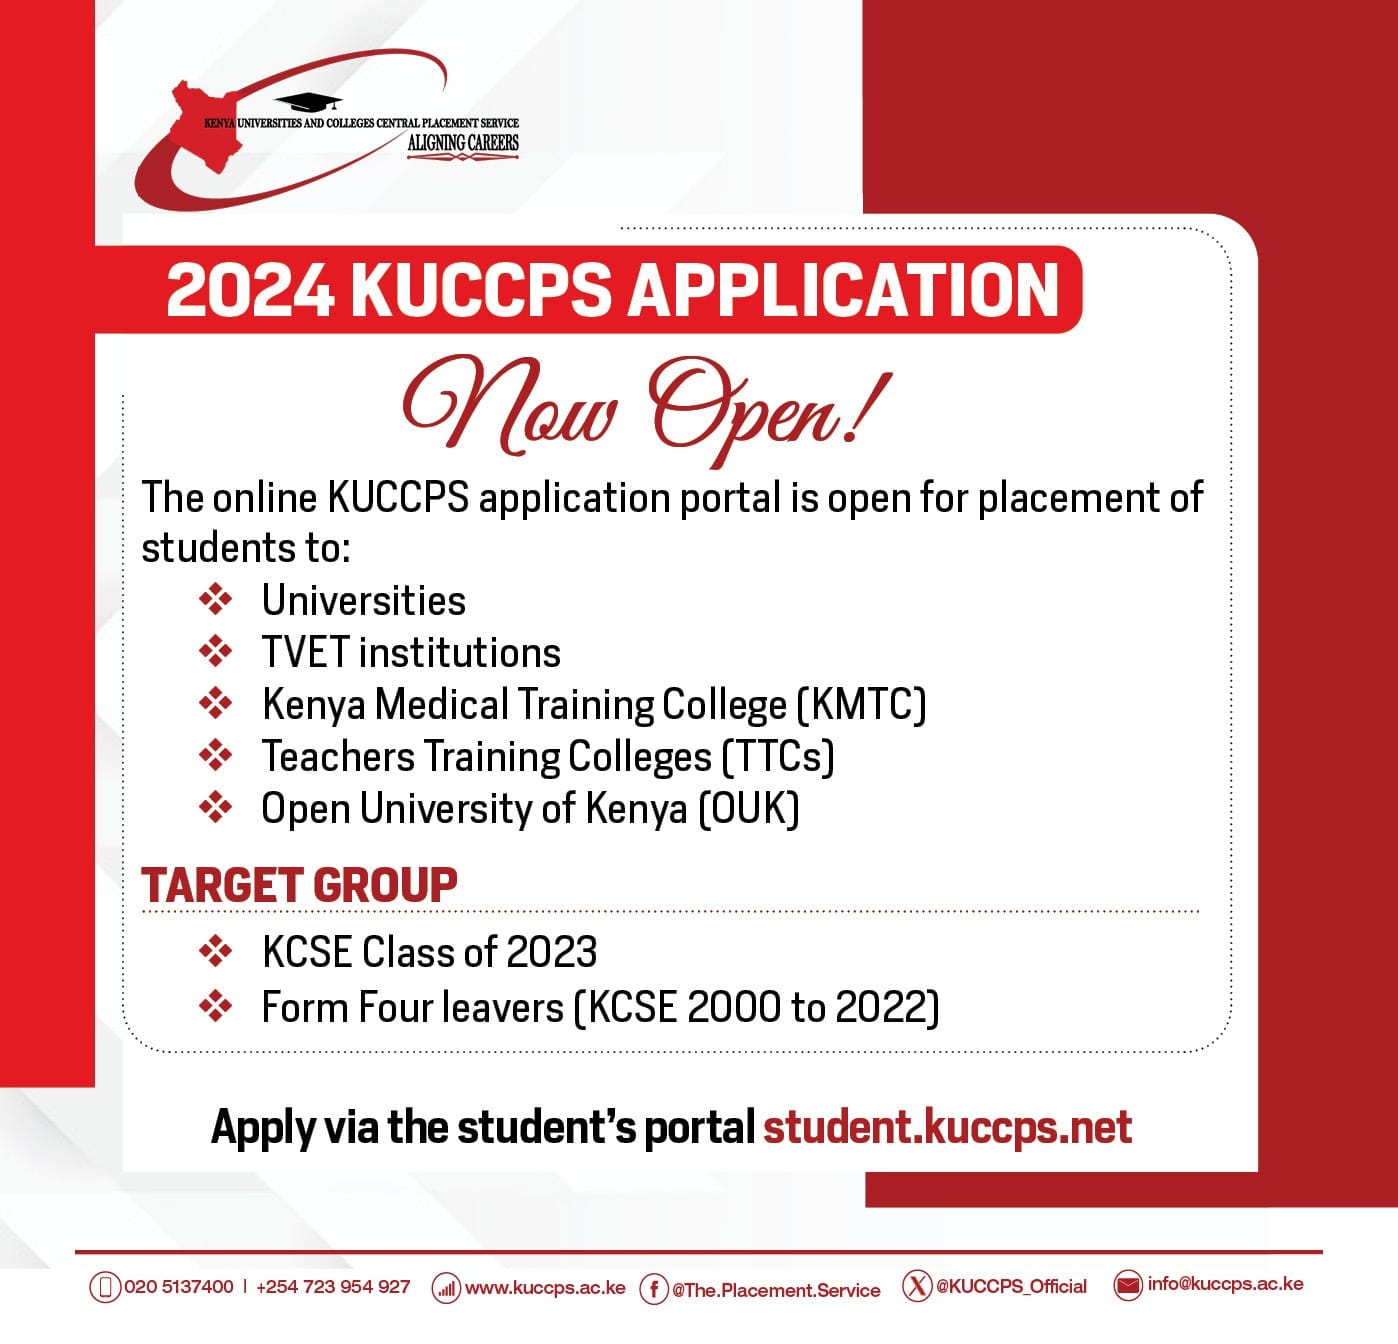 Koitaleel Samoei University College: KUCCPS Help Desk at Mosoriot Campus…